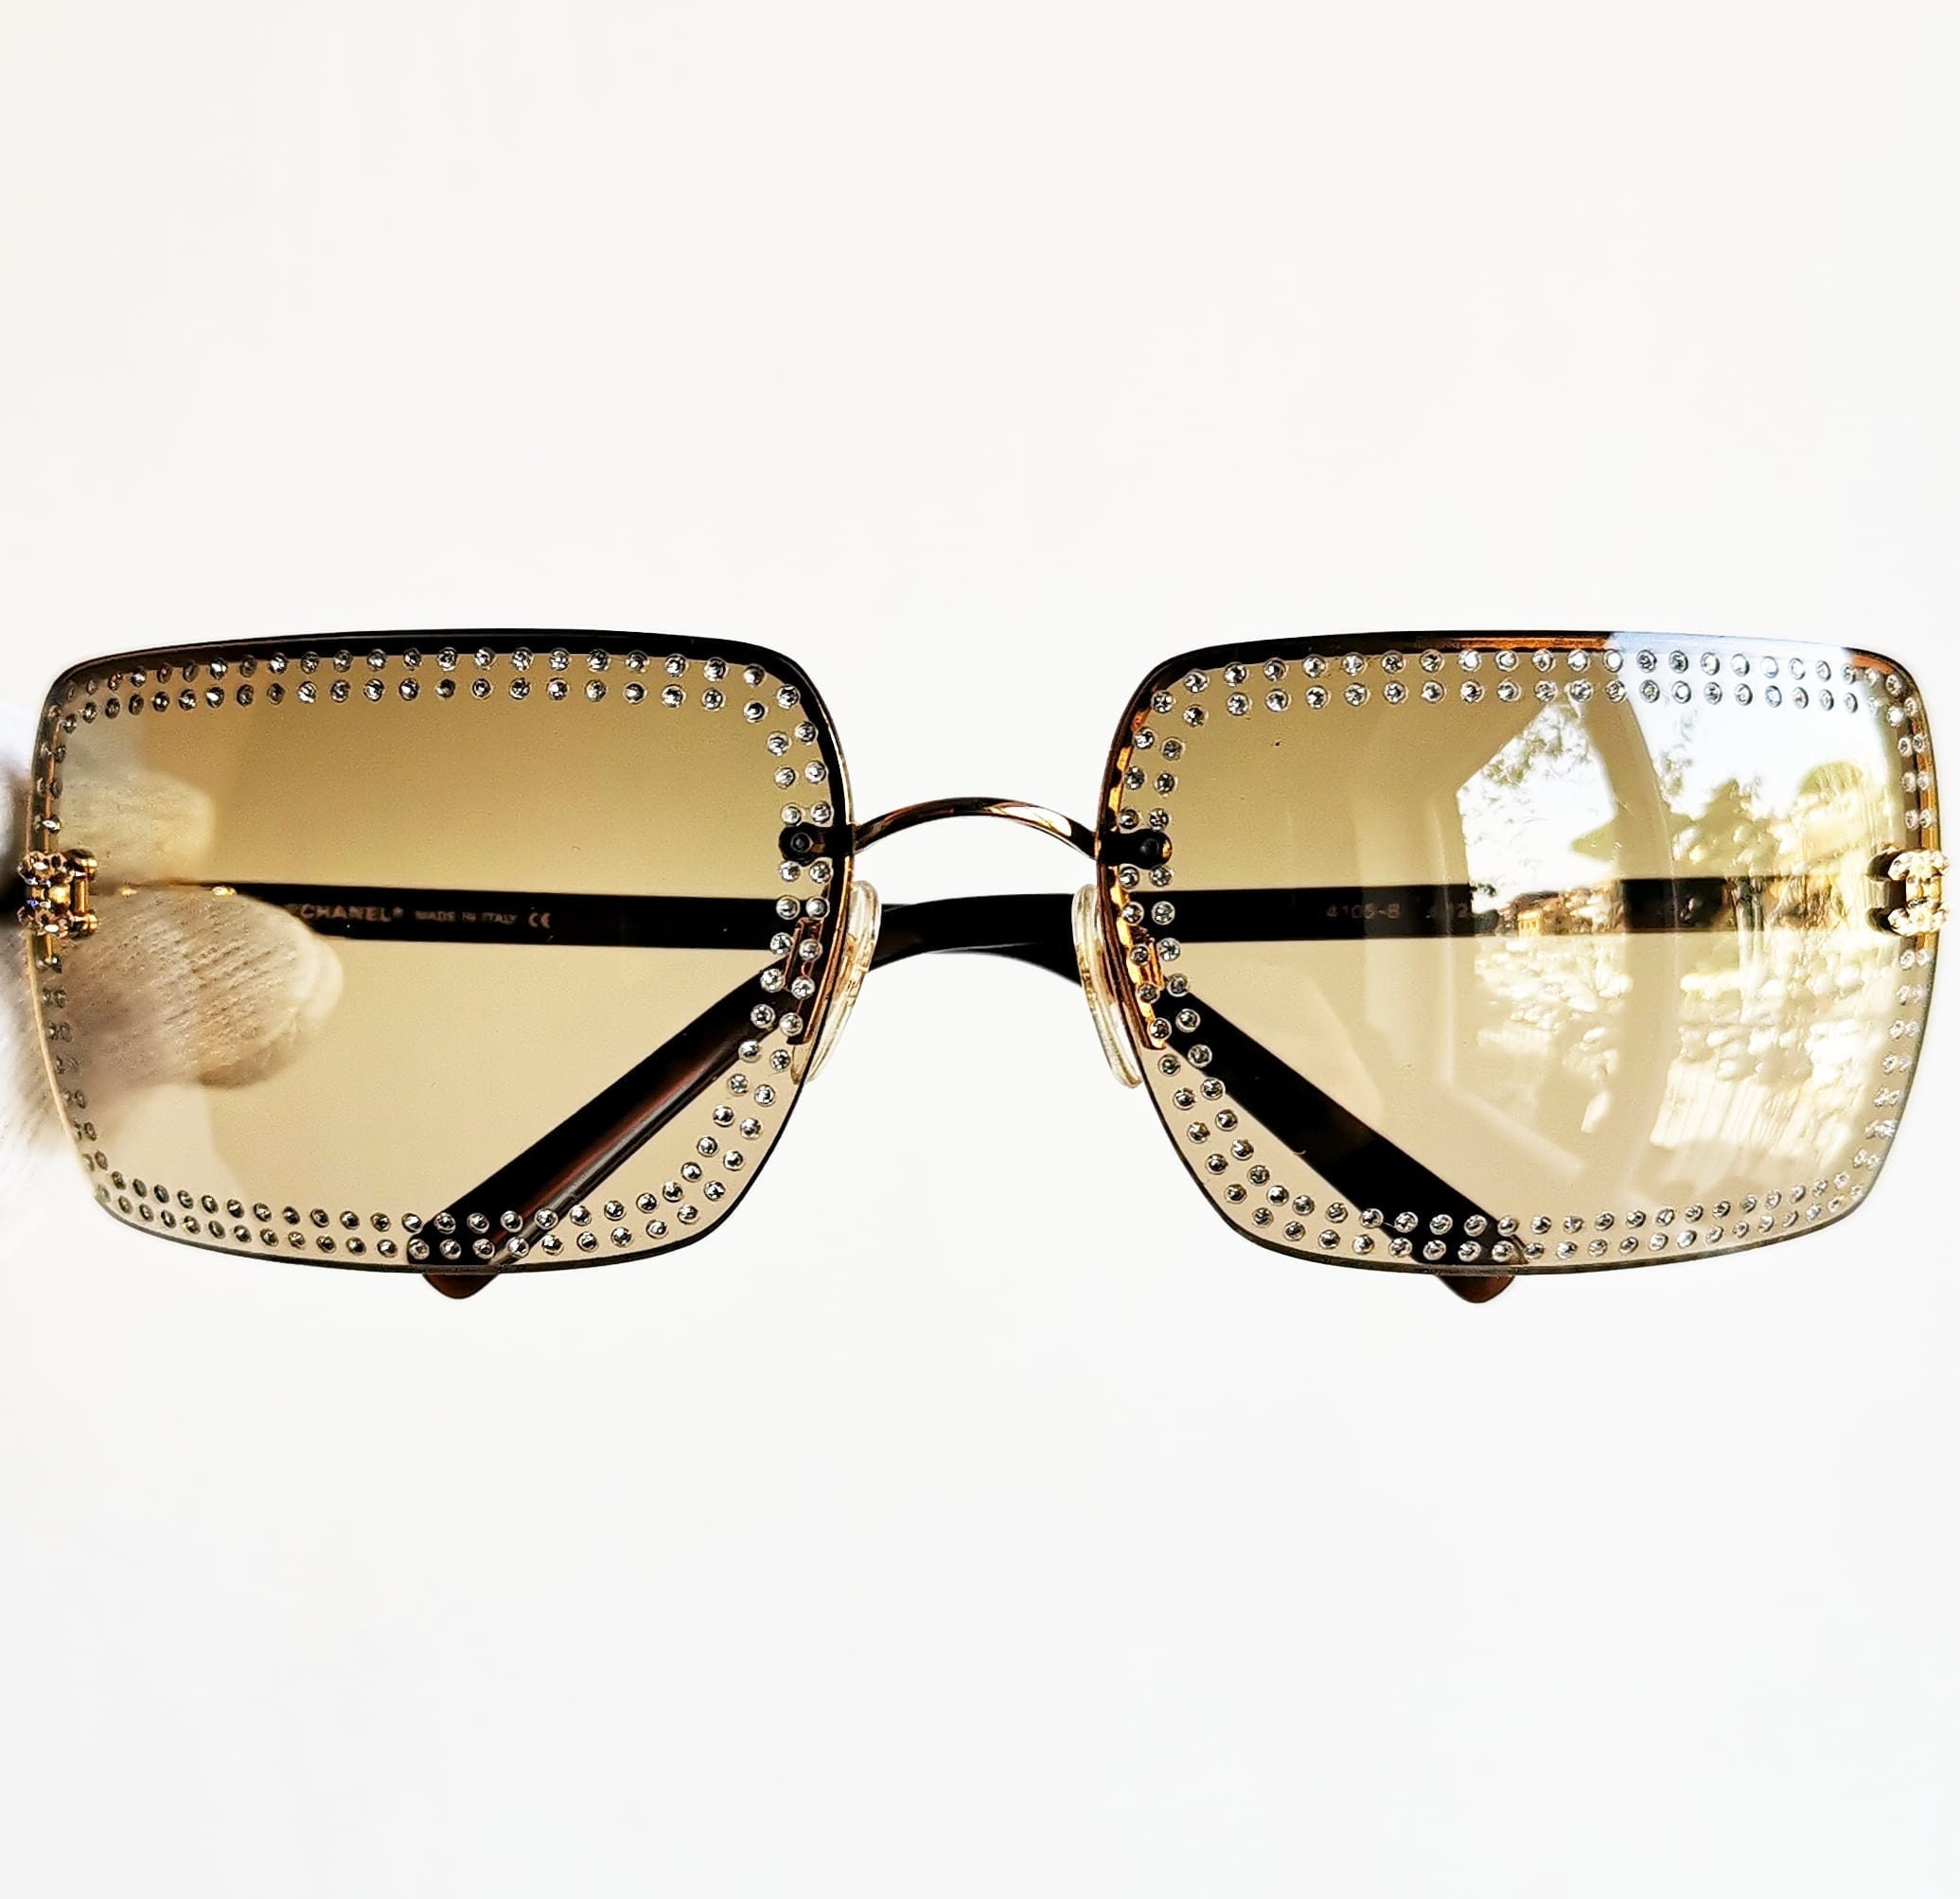 CHANEL vintage sunglasses rare oval small tiny orange black gold  rectangular frame 2105 Rihanna Migos Lady Gaga Kylie Jenner Bella Hadid 90s